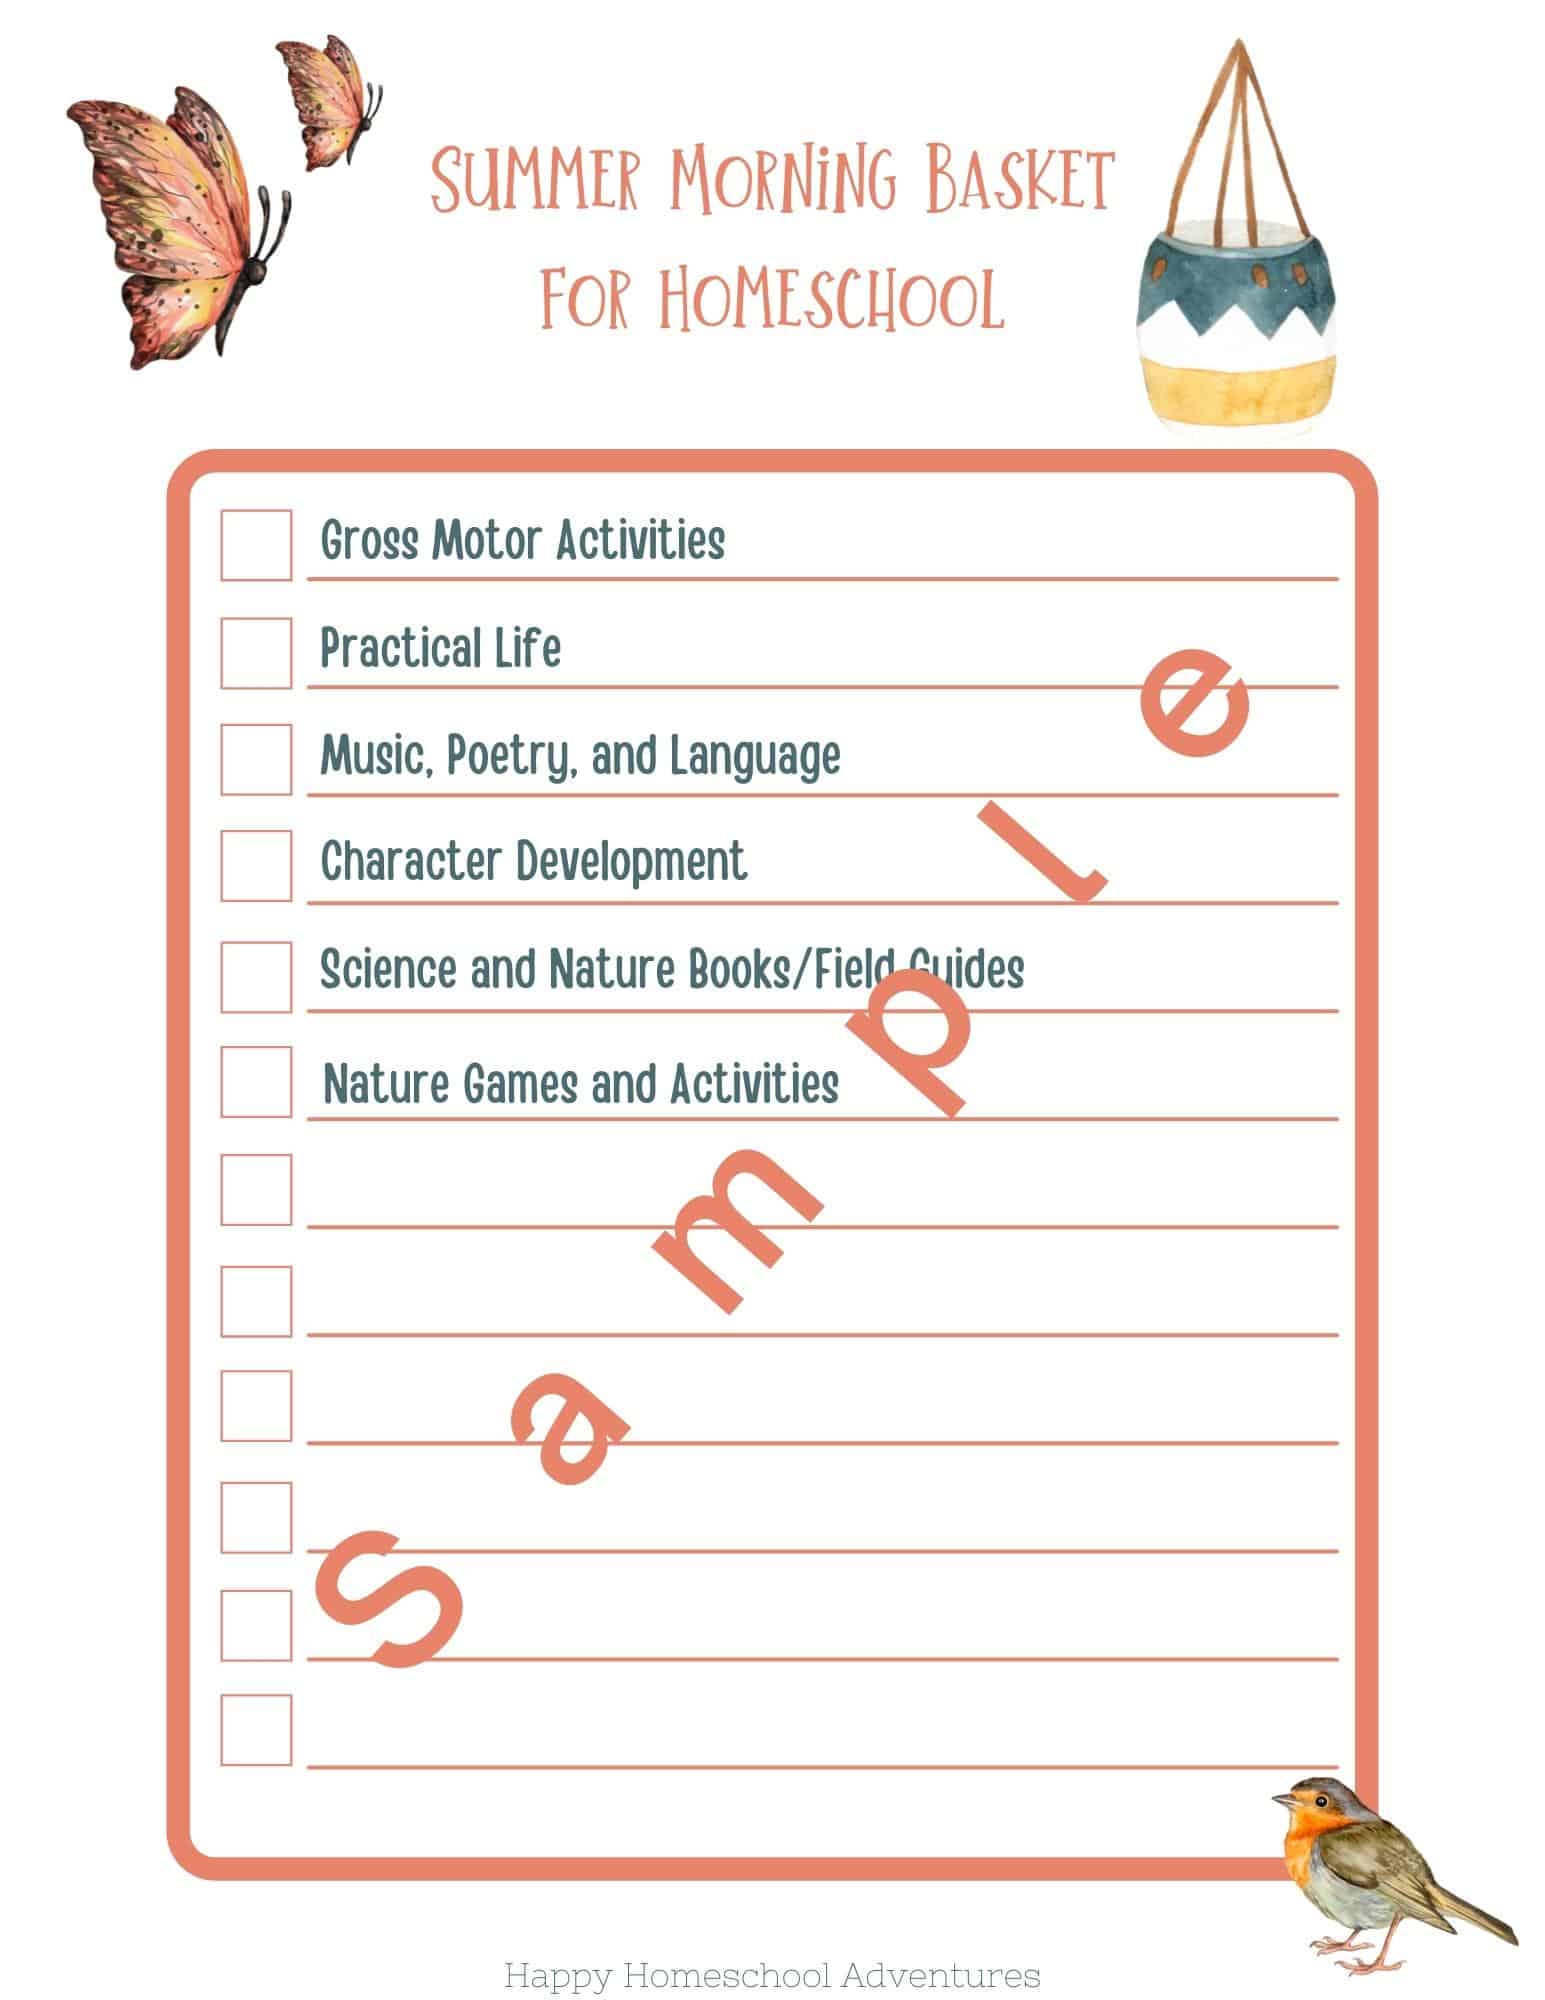 Free printable checklist for summer morning basket work